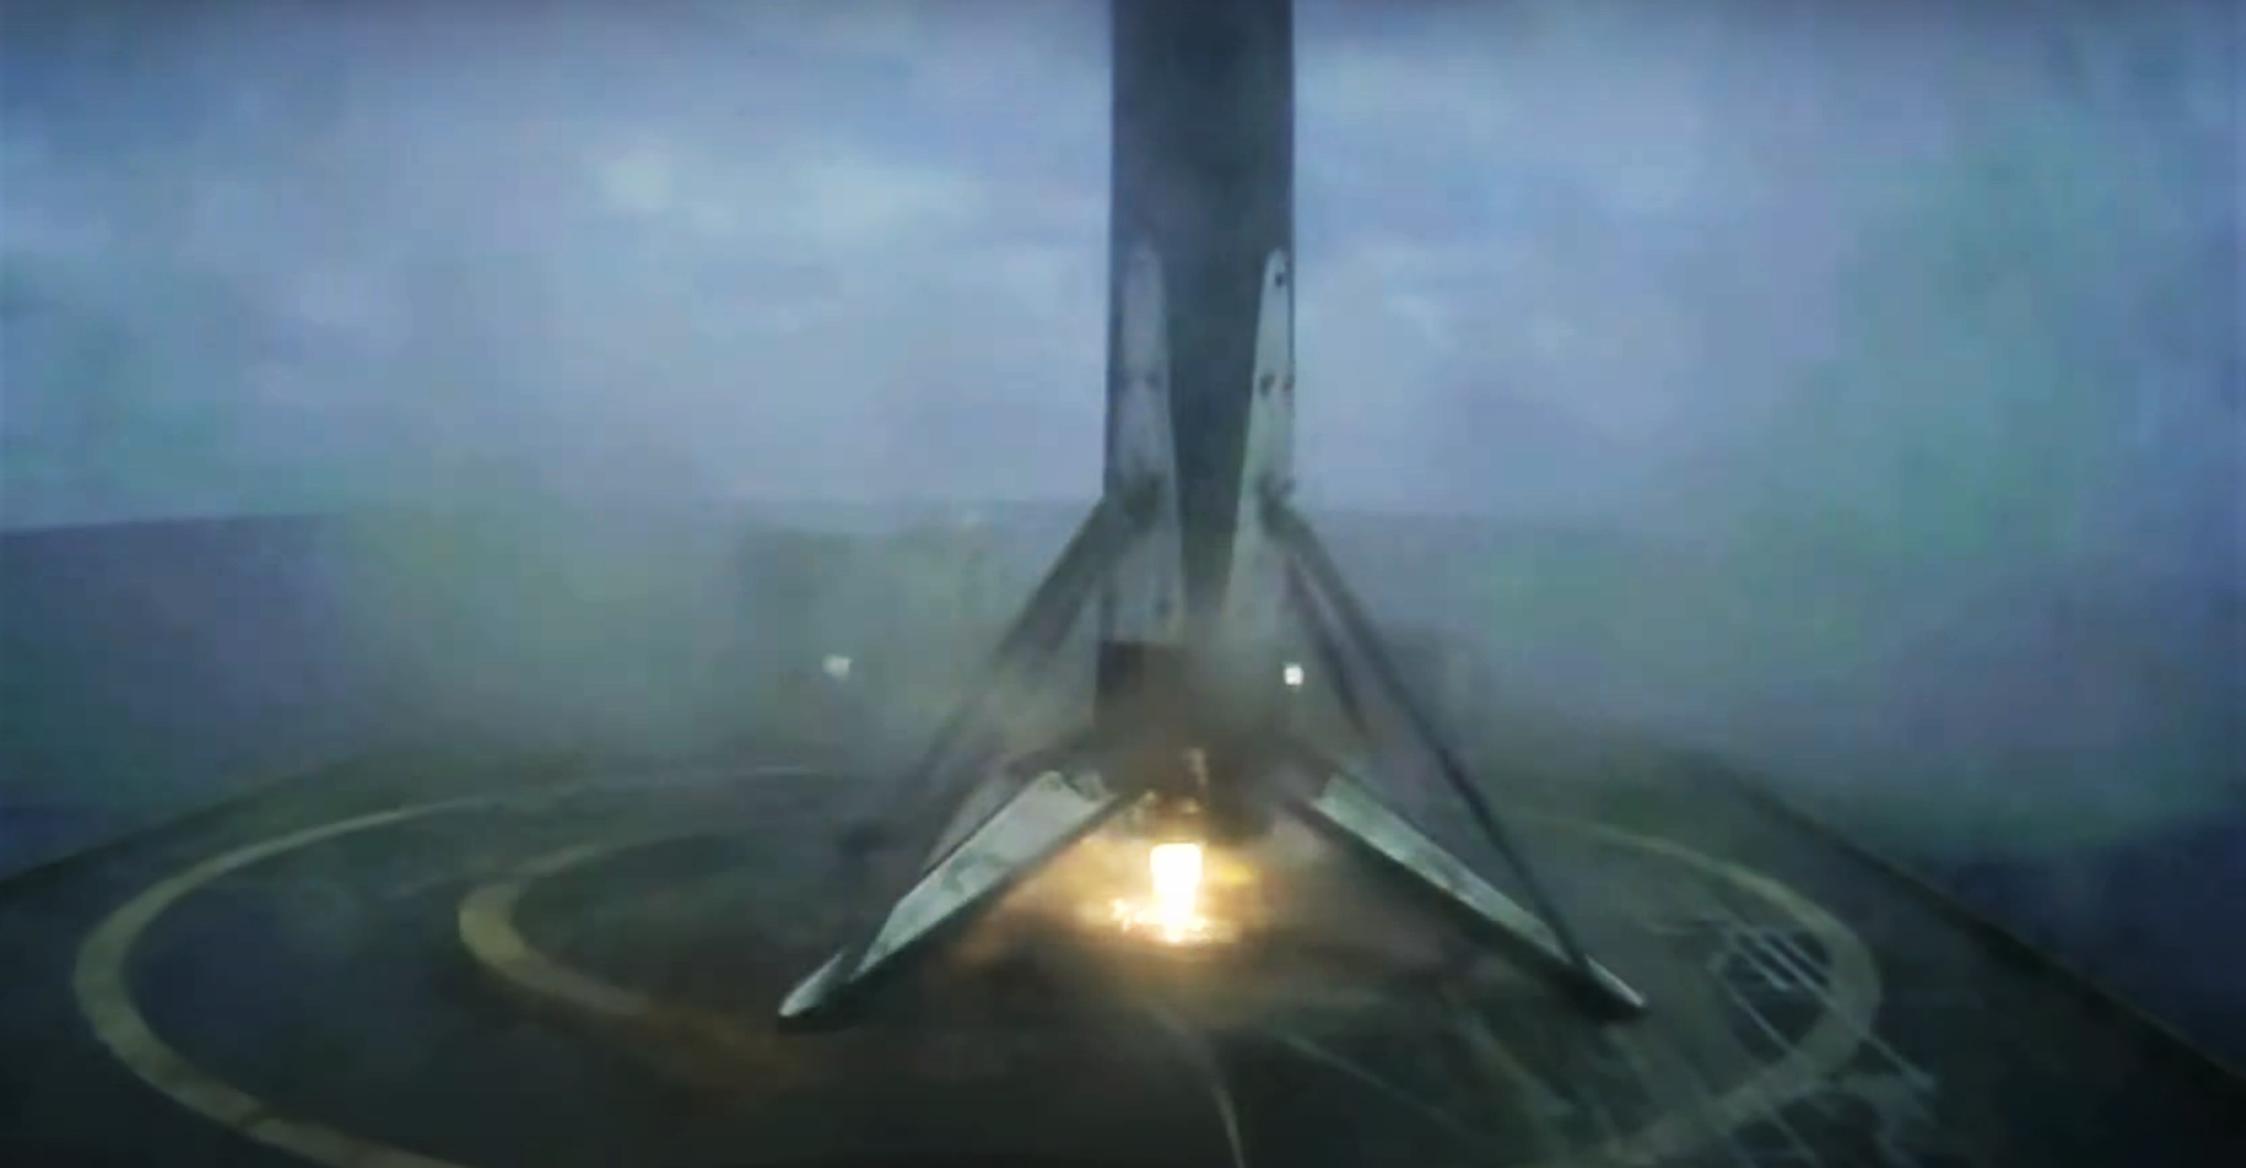 Starlink 4-14 F9 B1061 LC-40 042122 webcast (SpaceX) landing 6 (c)